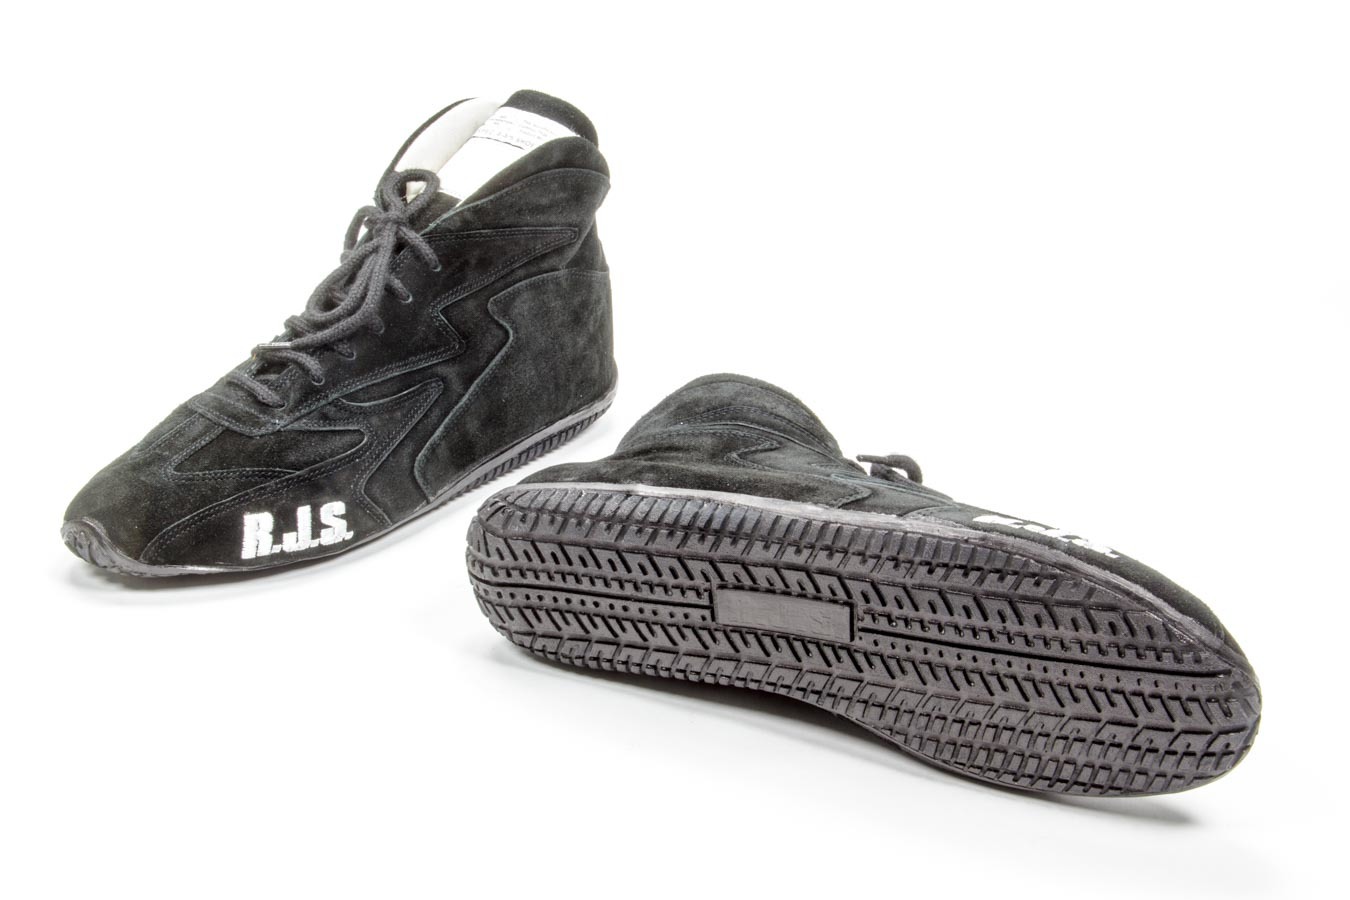 RJS, Redline Racing Shoe Mid-Top Black Size 10 SFI-5